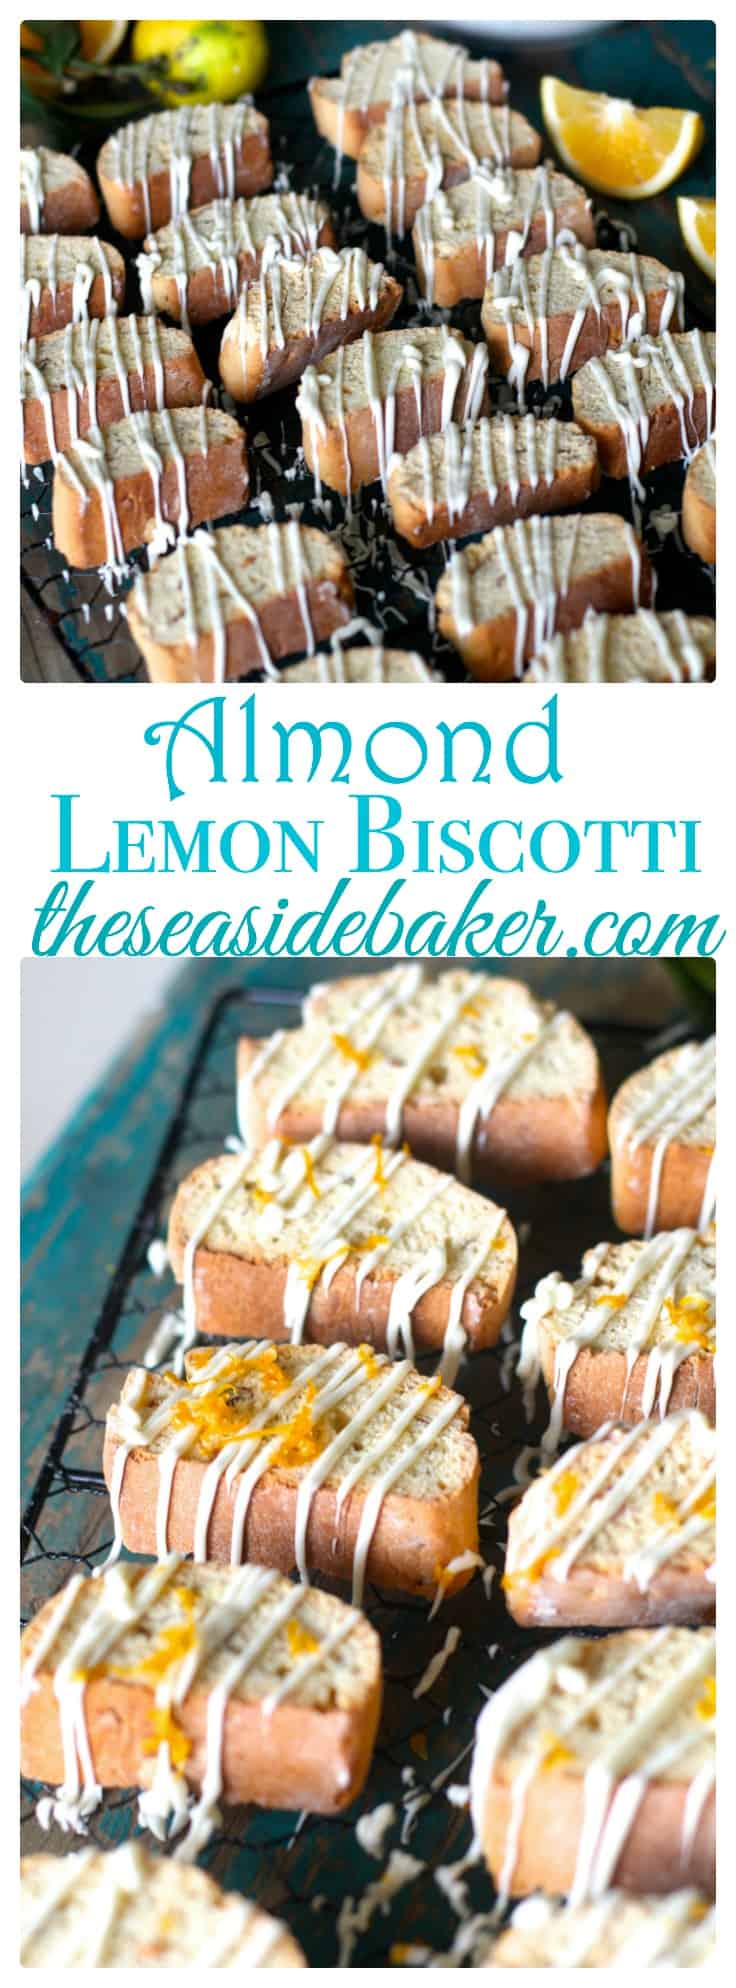 Almond Lemon Biscotti